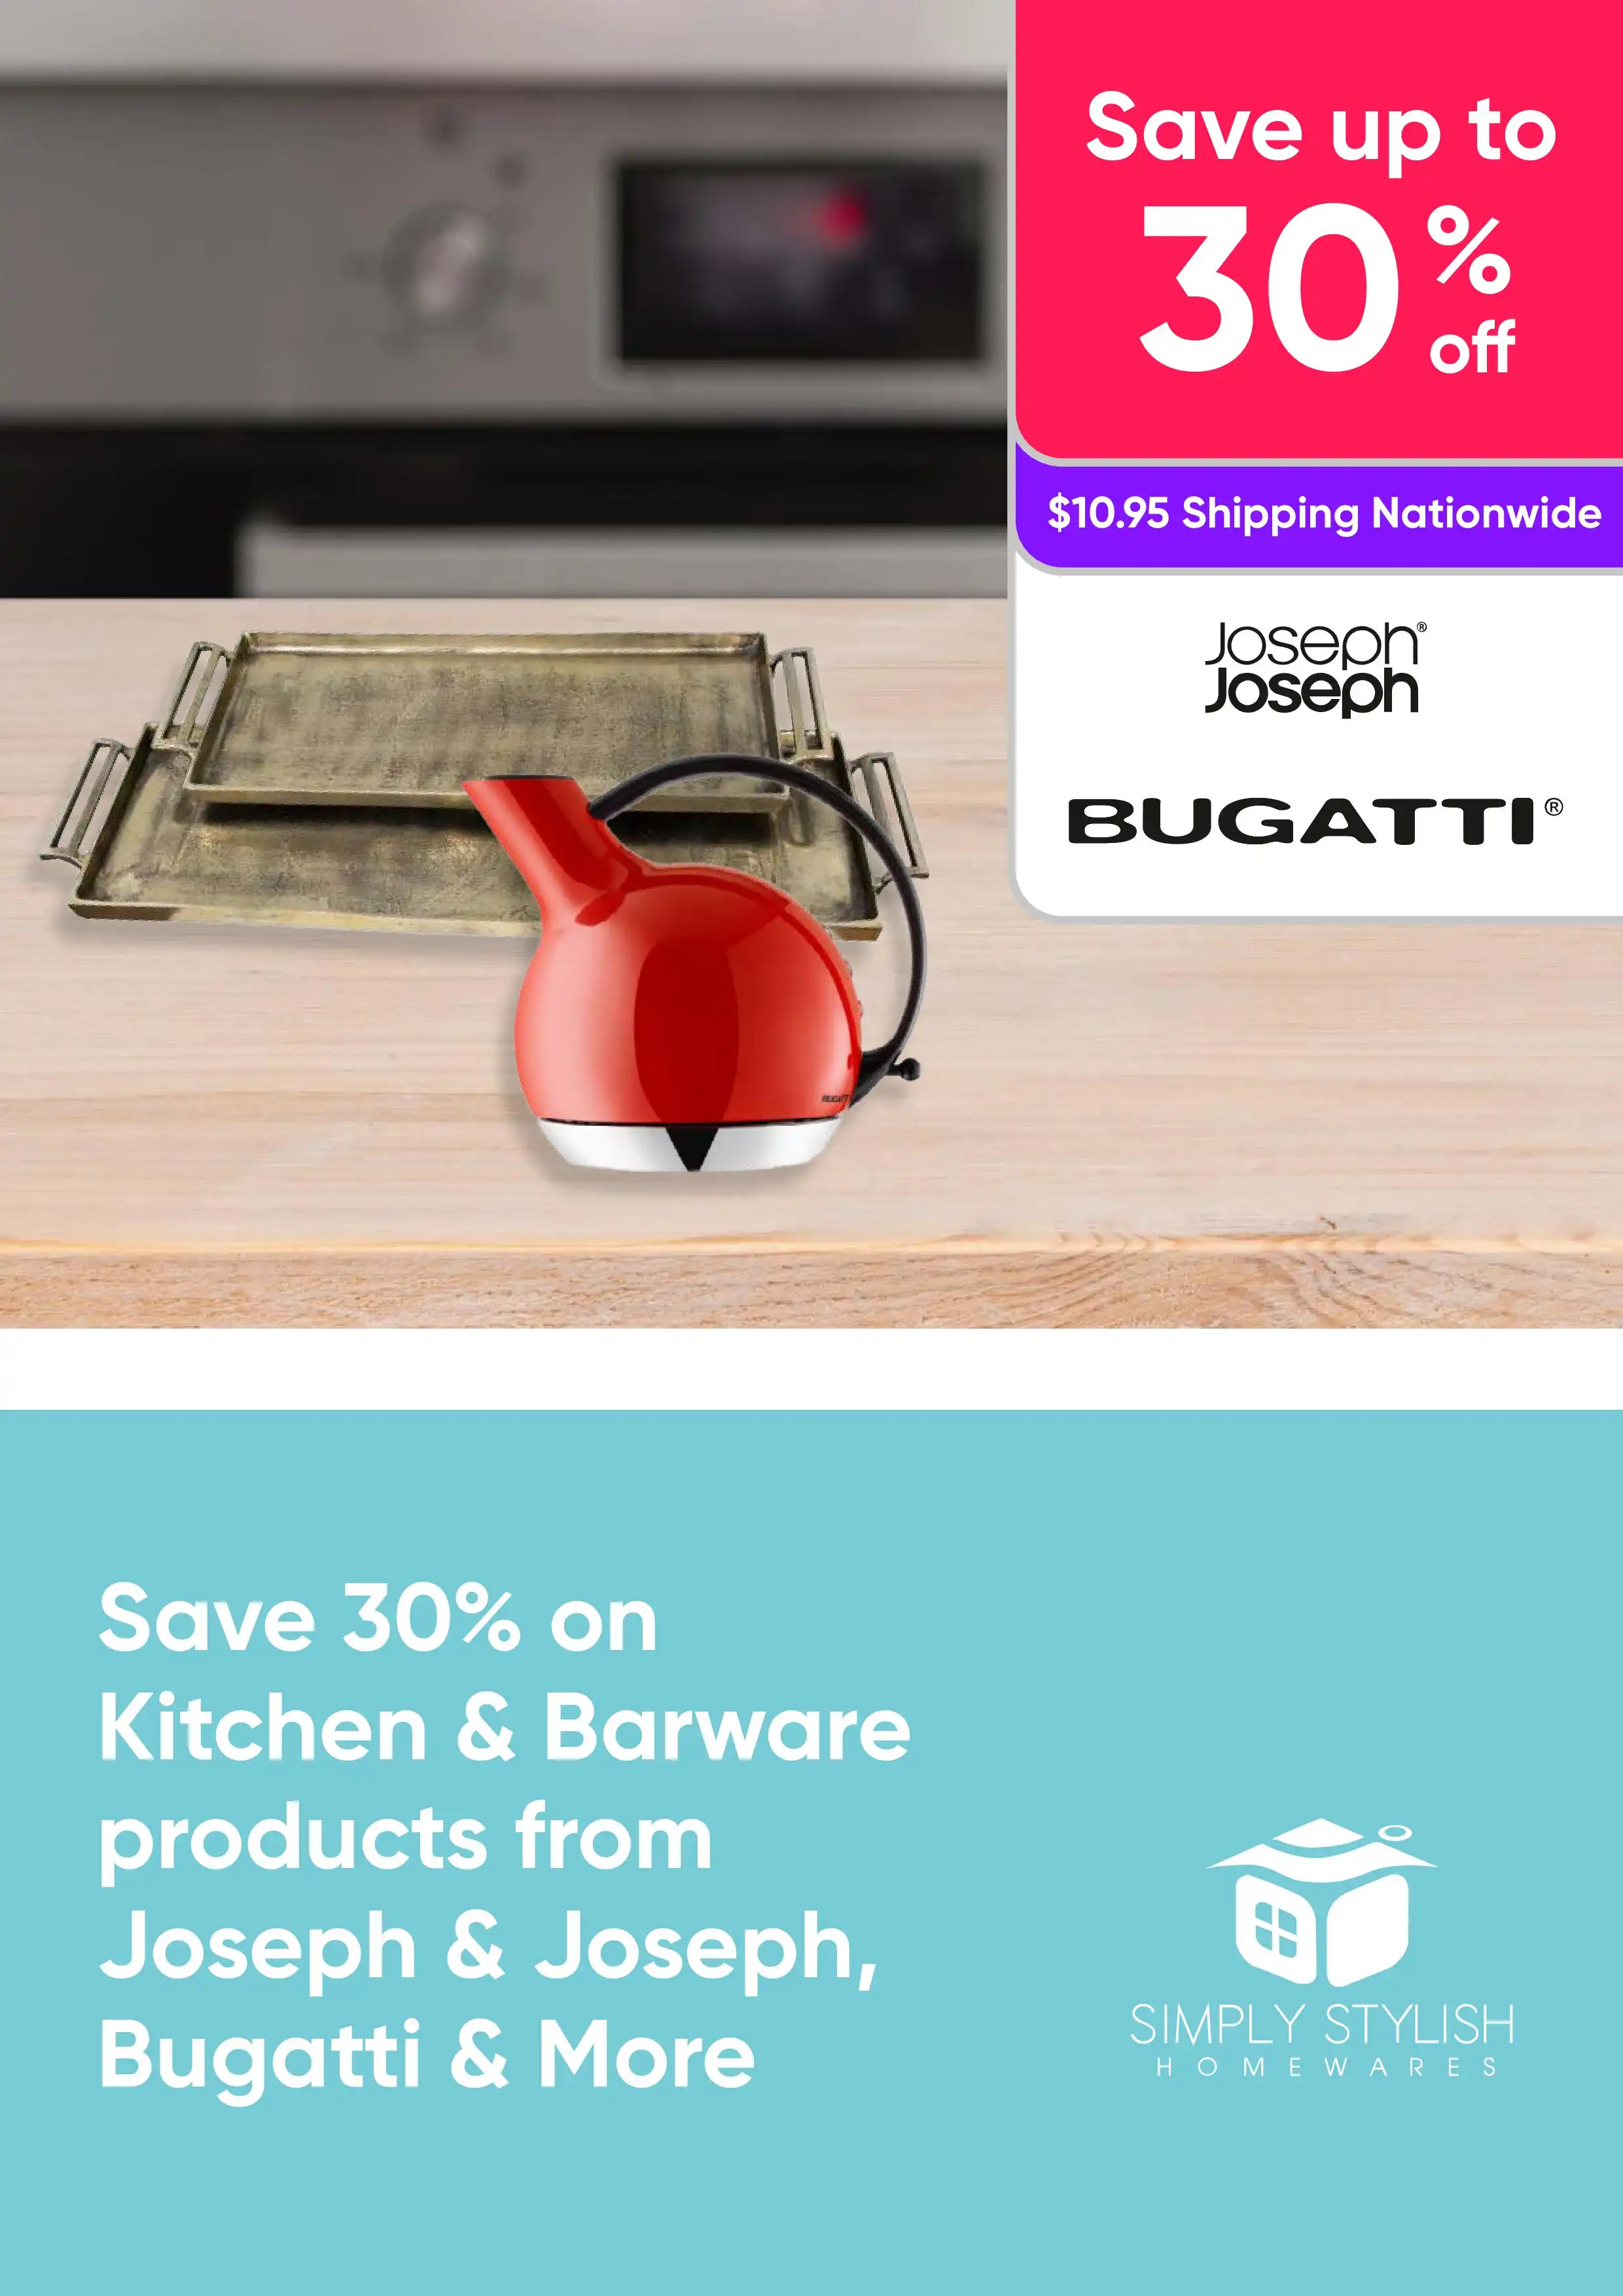 Save 30% on Kitchen & Barware products from Jospeh & Joseph, Bugatti & more